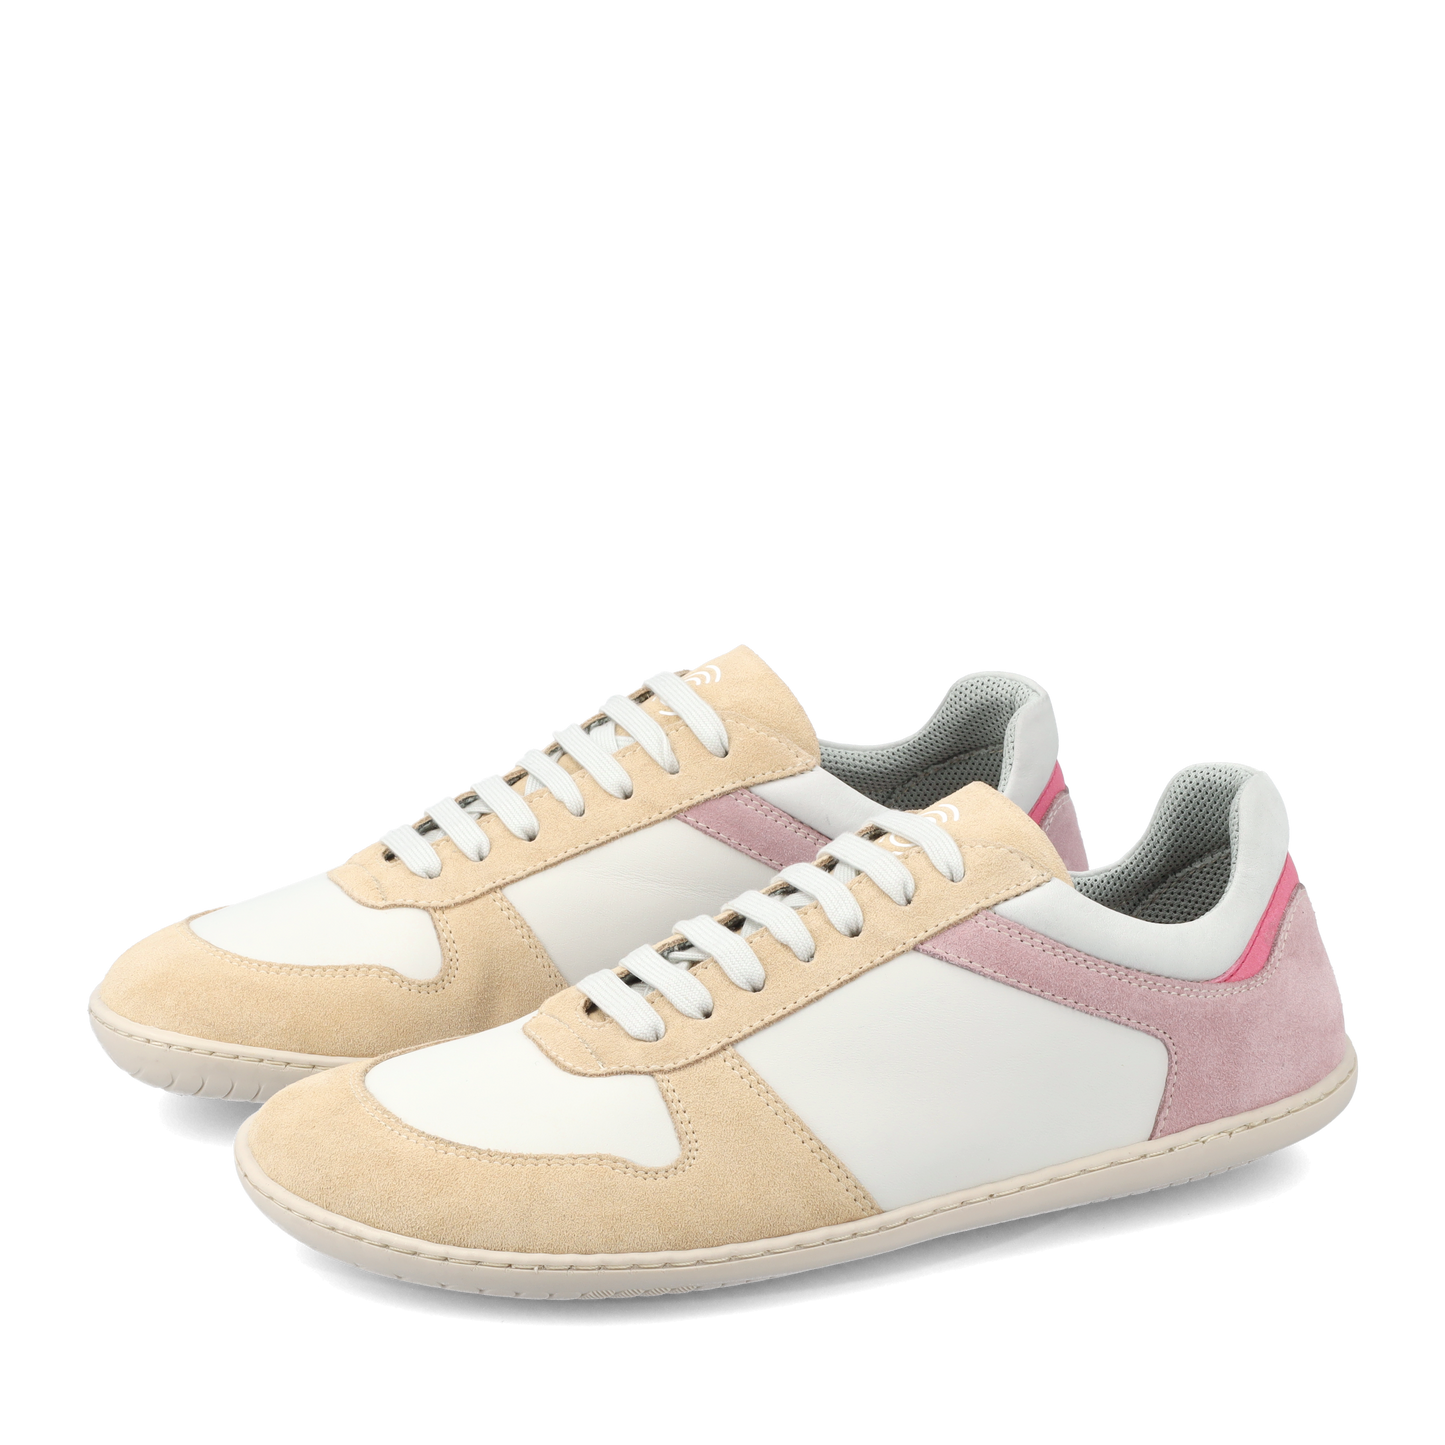 Groundies Orlando Women barfods sneakers til kvinder i farven off-white / beige / pink, par